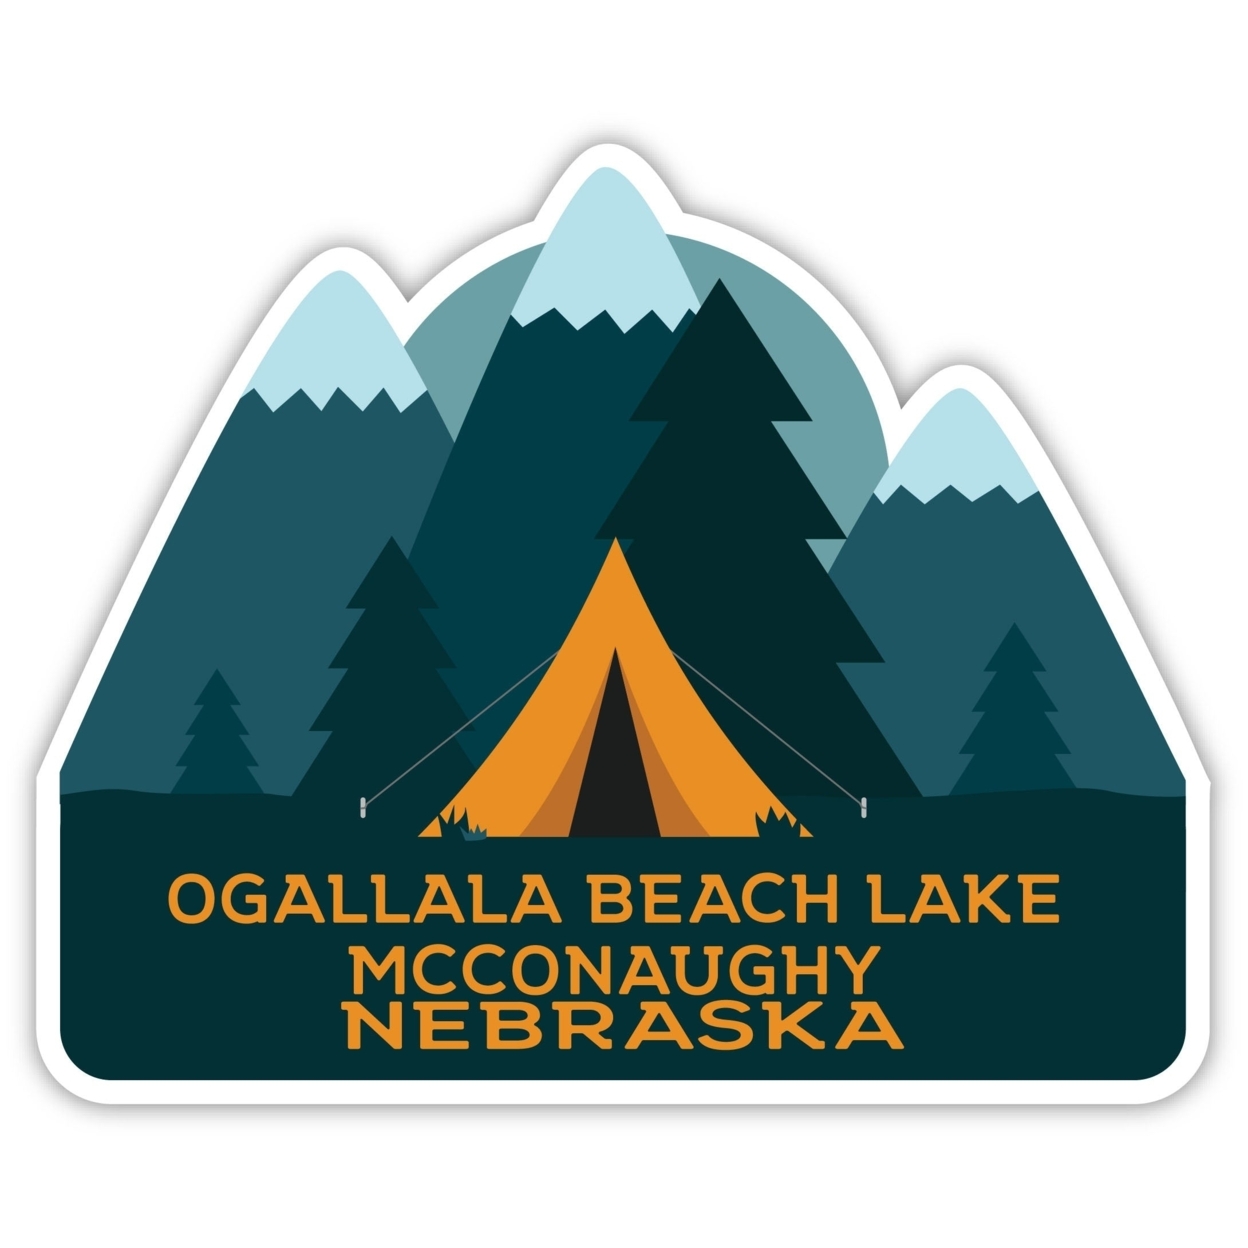 Ogallala Beach Lake Mcconaughy Nebraska Souvenir Decorative Stickers (Choose Theme And Size) - Single Unit, 4-Inch, Tent